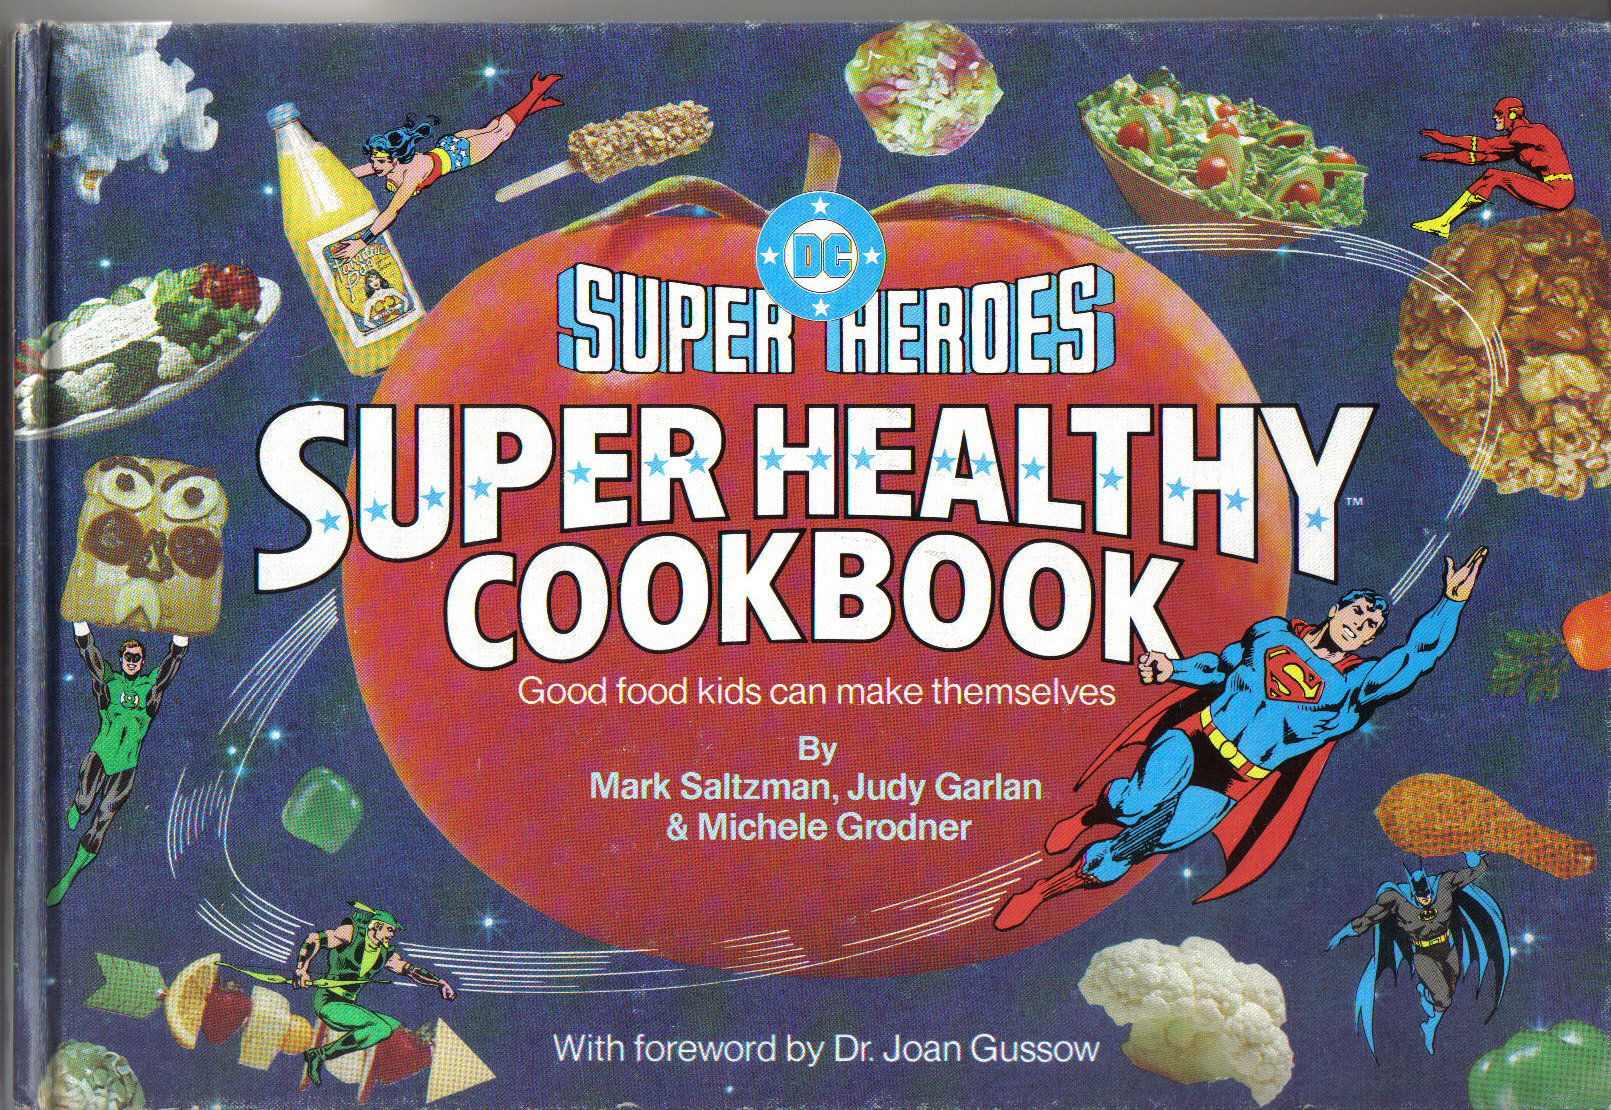 DC Super Heroes Super Healthy Cookbook (1981) Cover